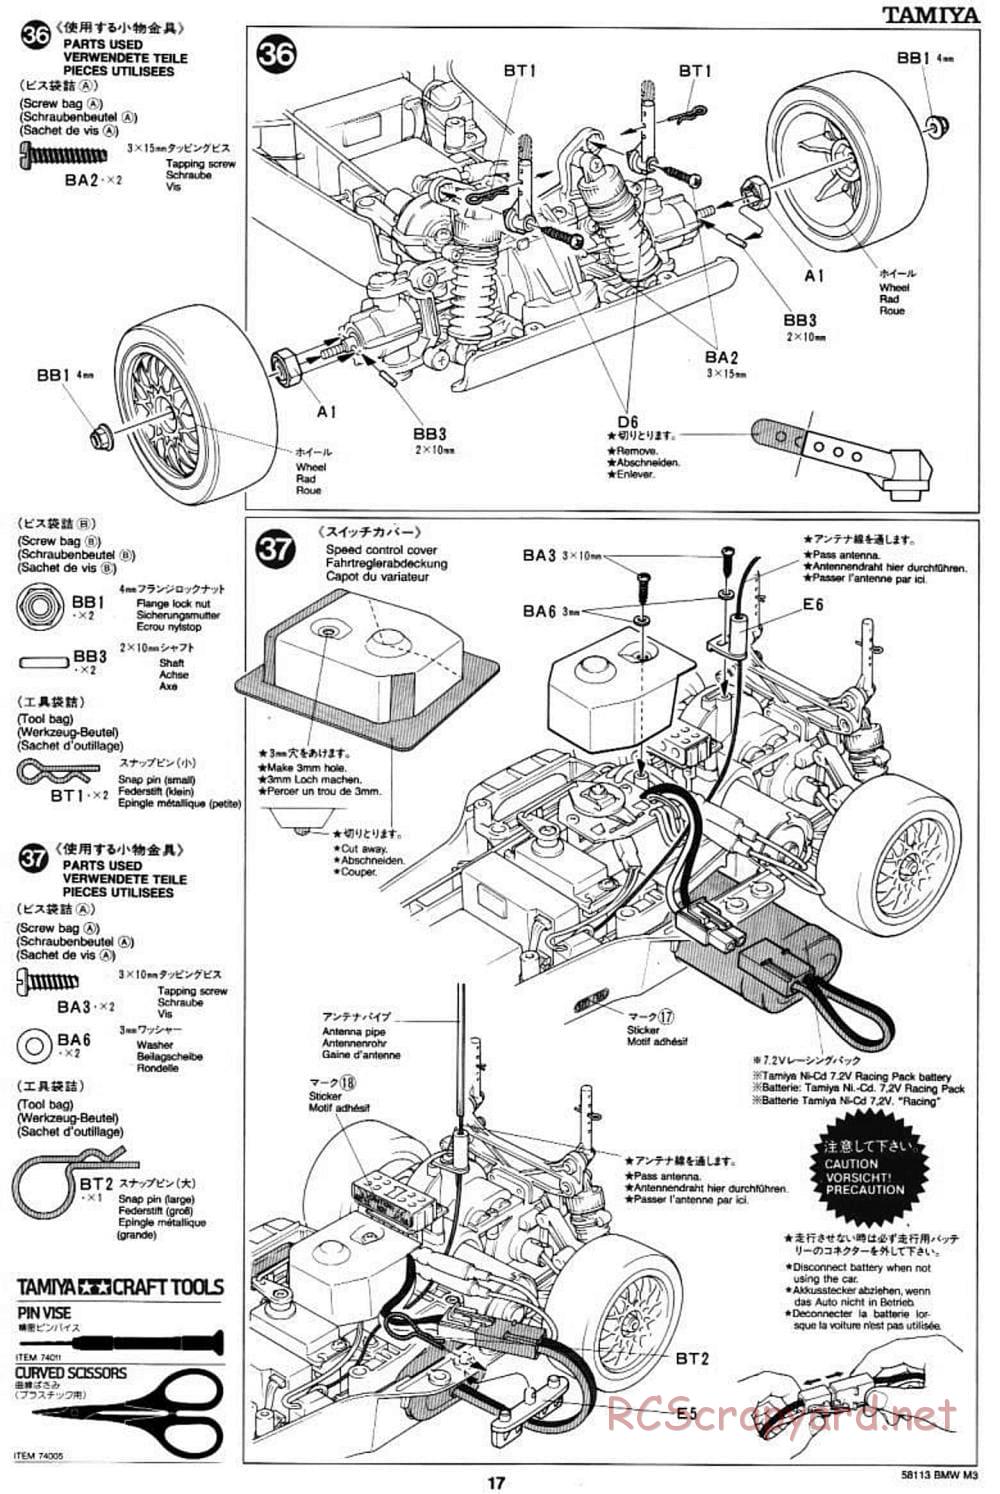 Tamiya - Schnitzer BMW M3 Sport Evo - TA-01 Chassis - Manual - Page 17